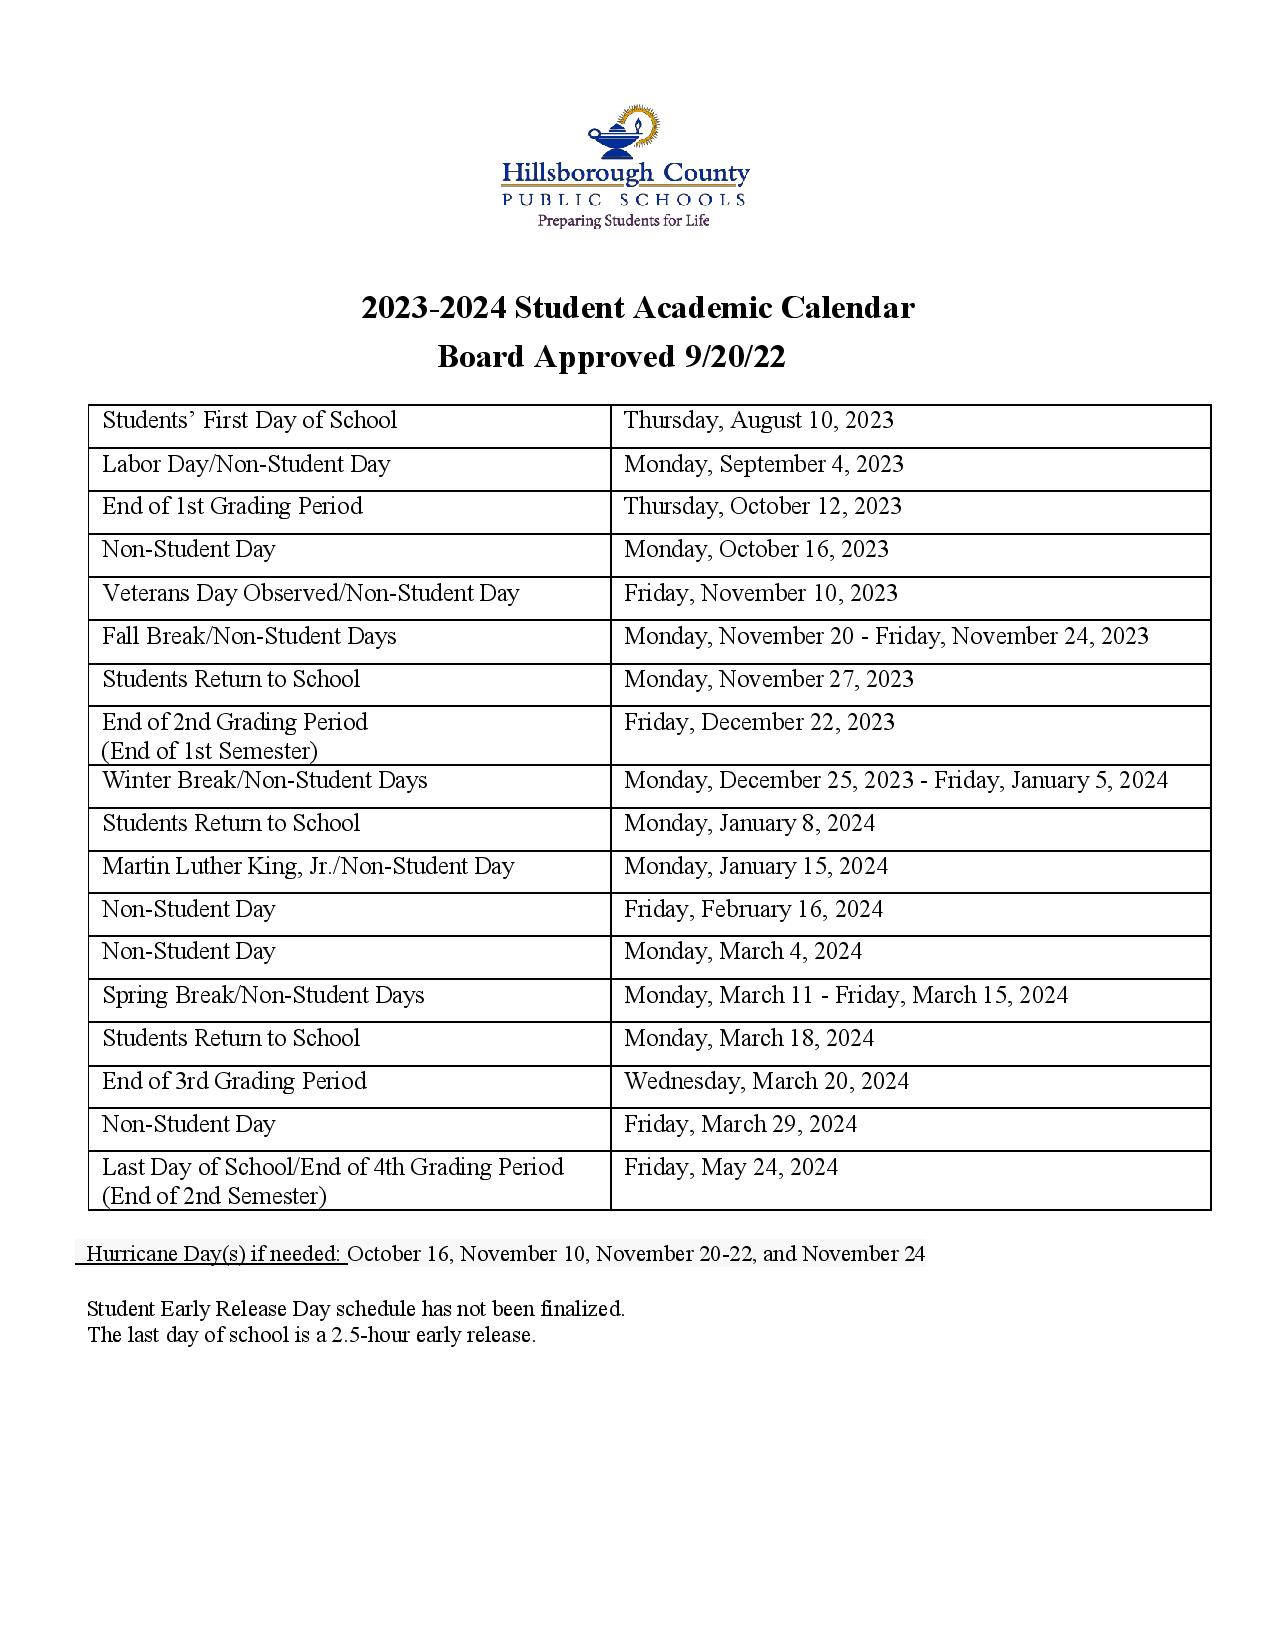 Hillsborough County Public Schools Calendar Holidays 2024-2025